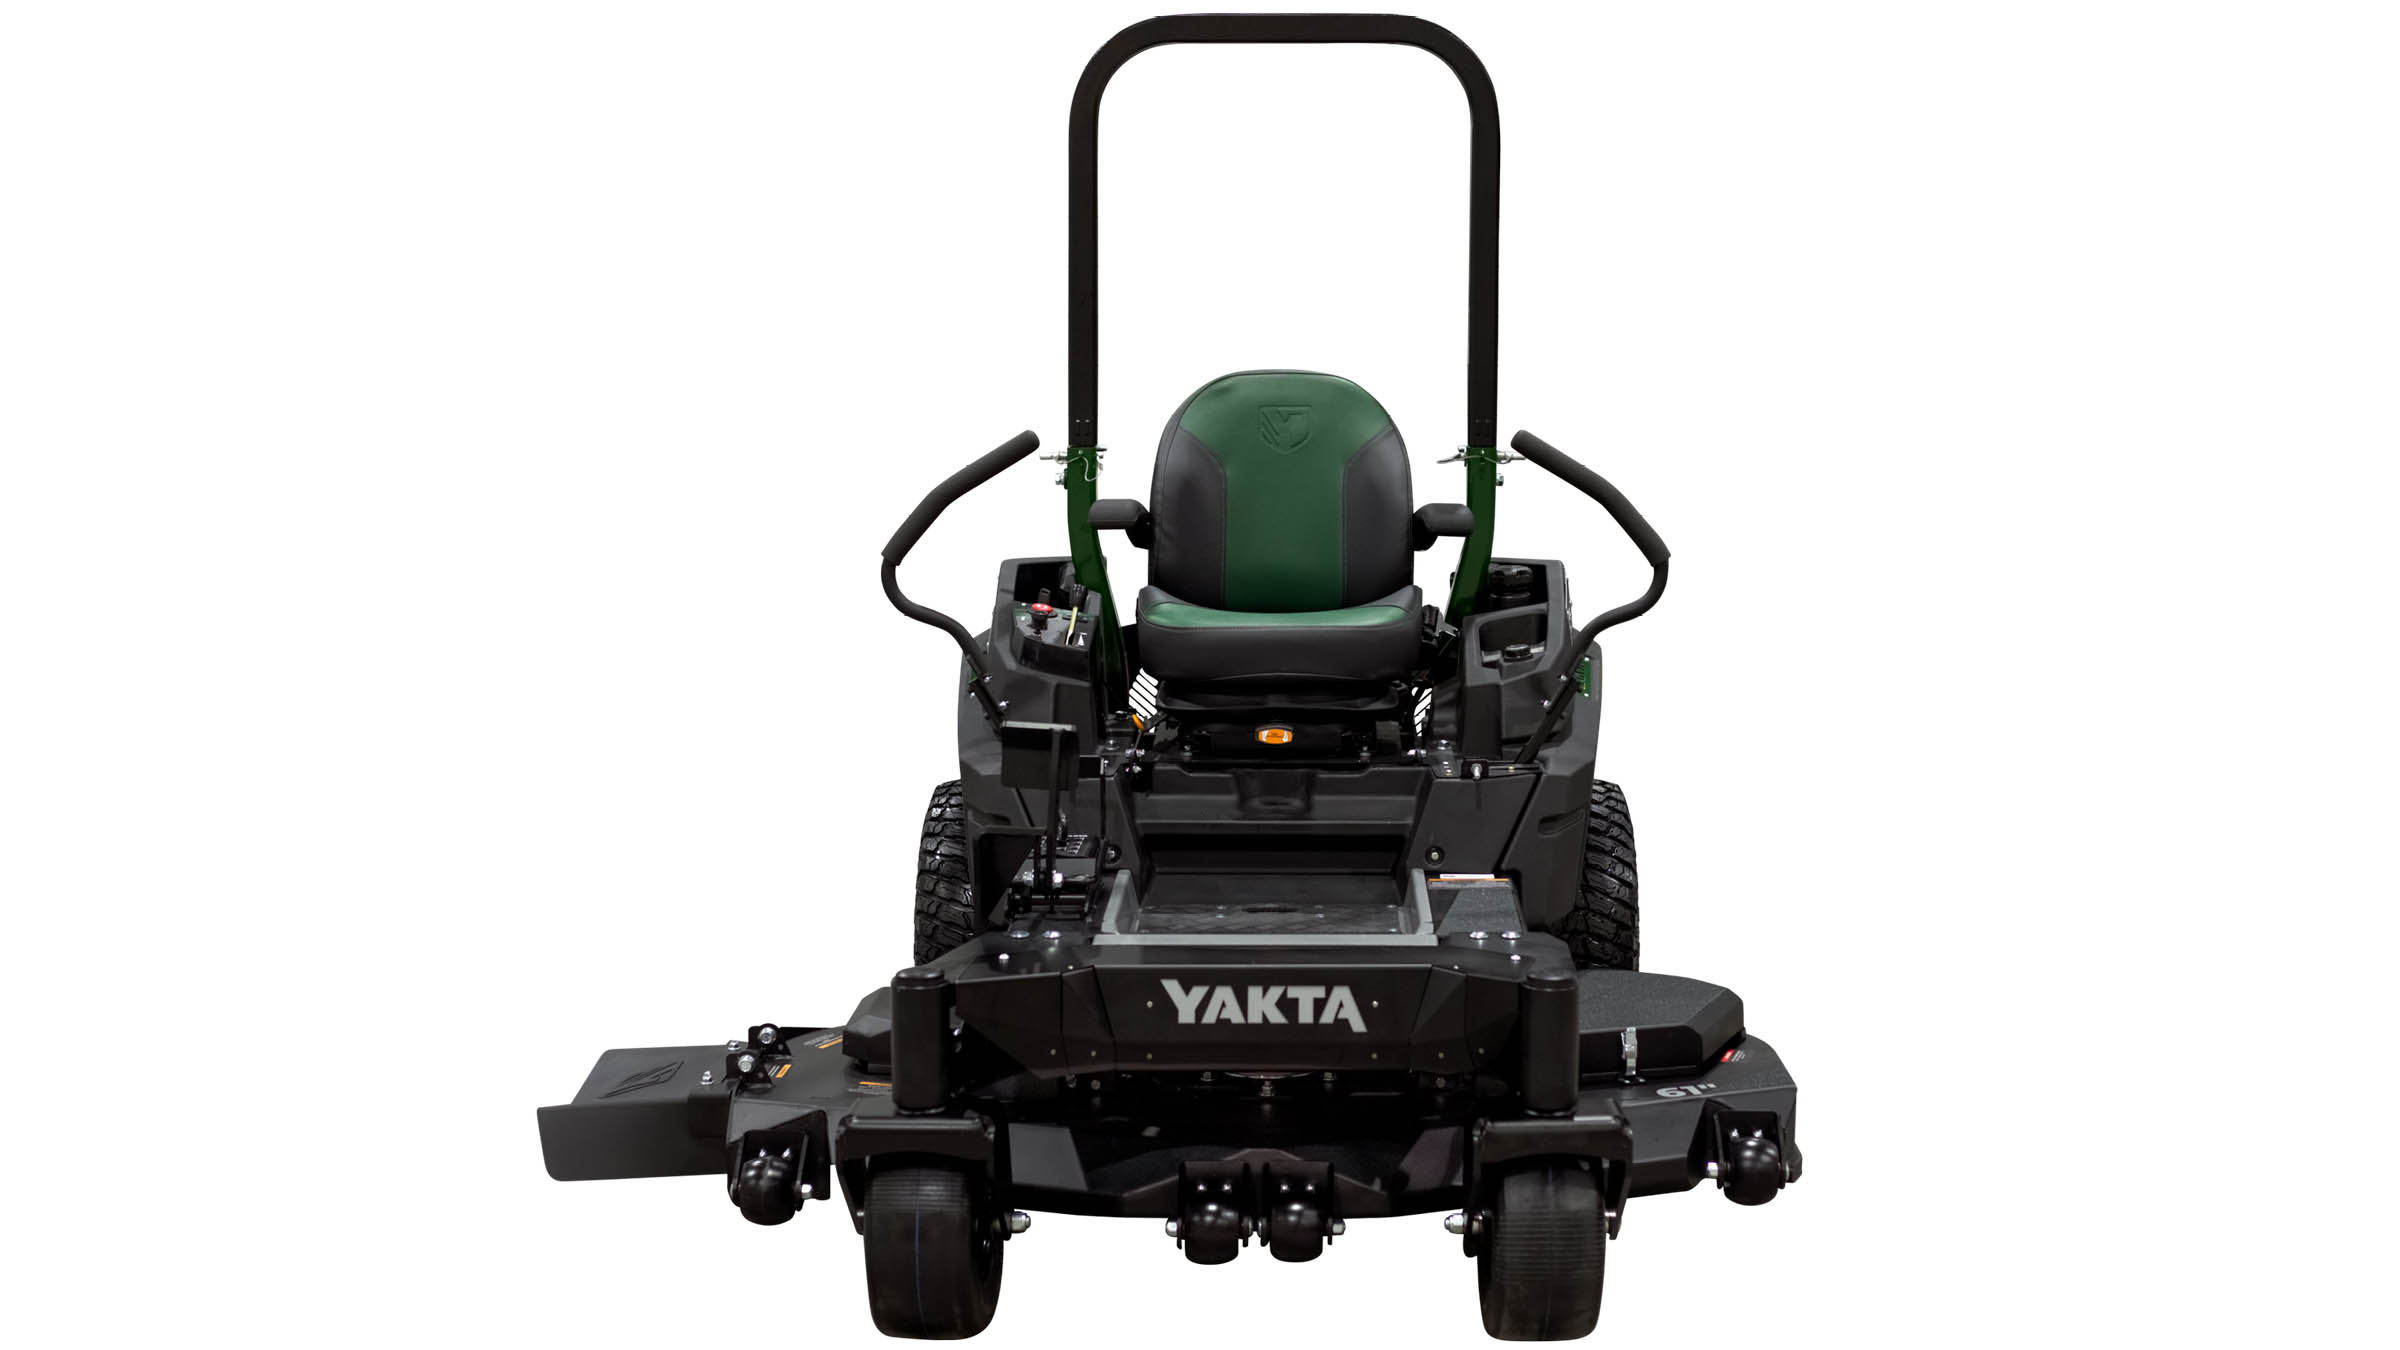 Yakta YXR 410 zero-turn riding lawn mower